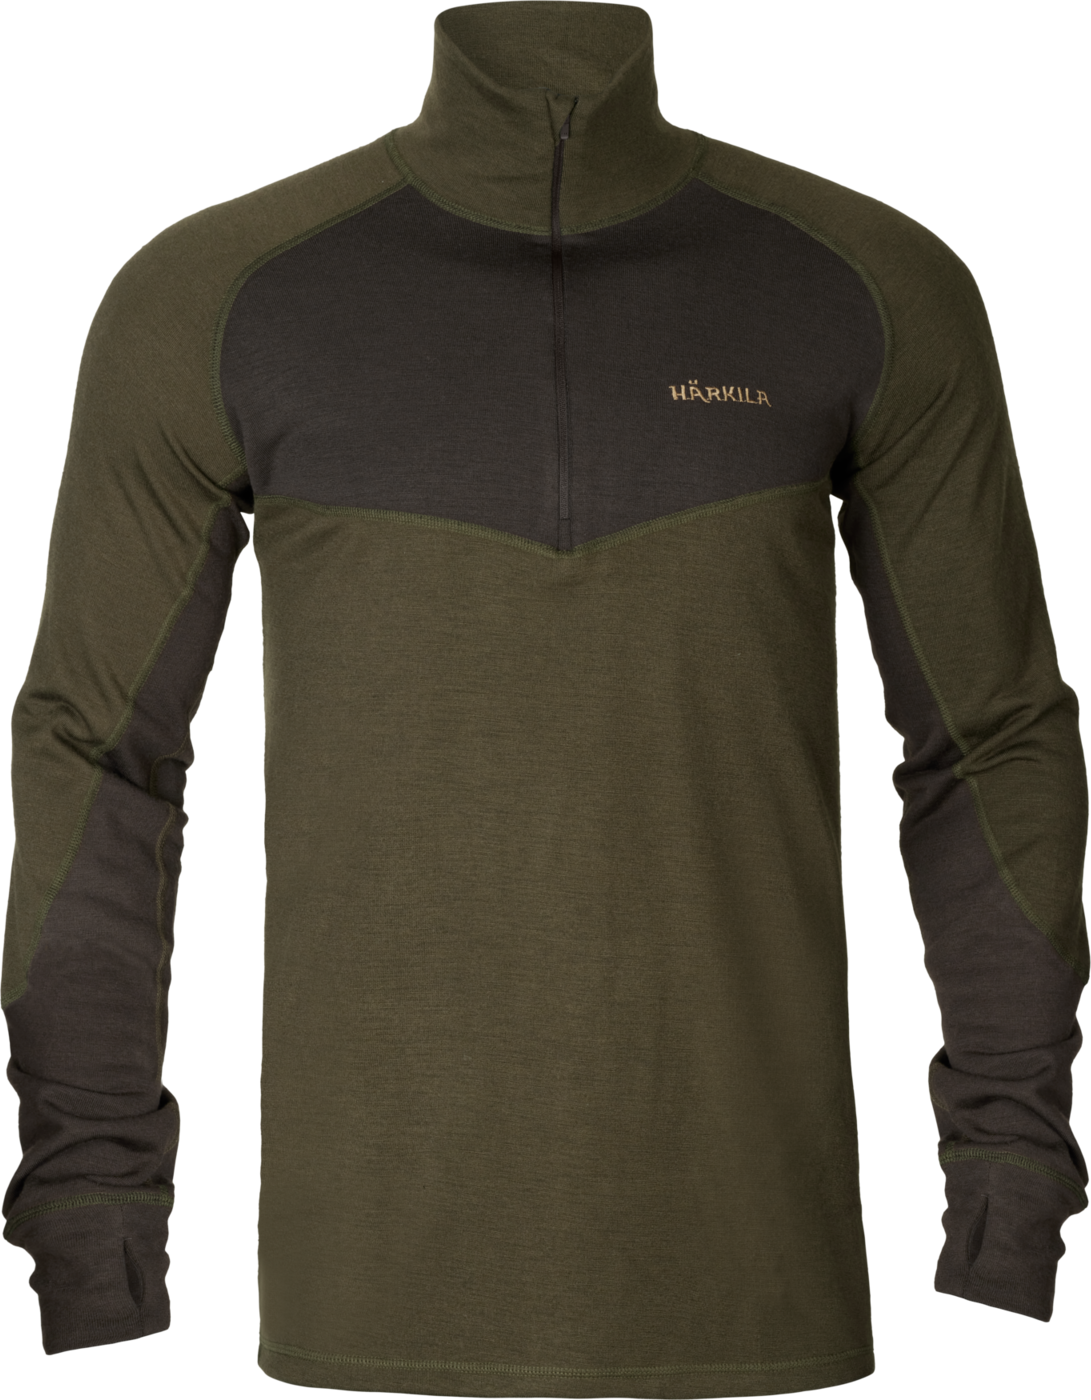 Men’s Base Warm Baselayer Shirt Willow green/Shadow brown